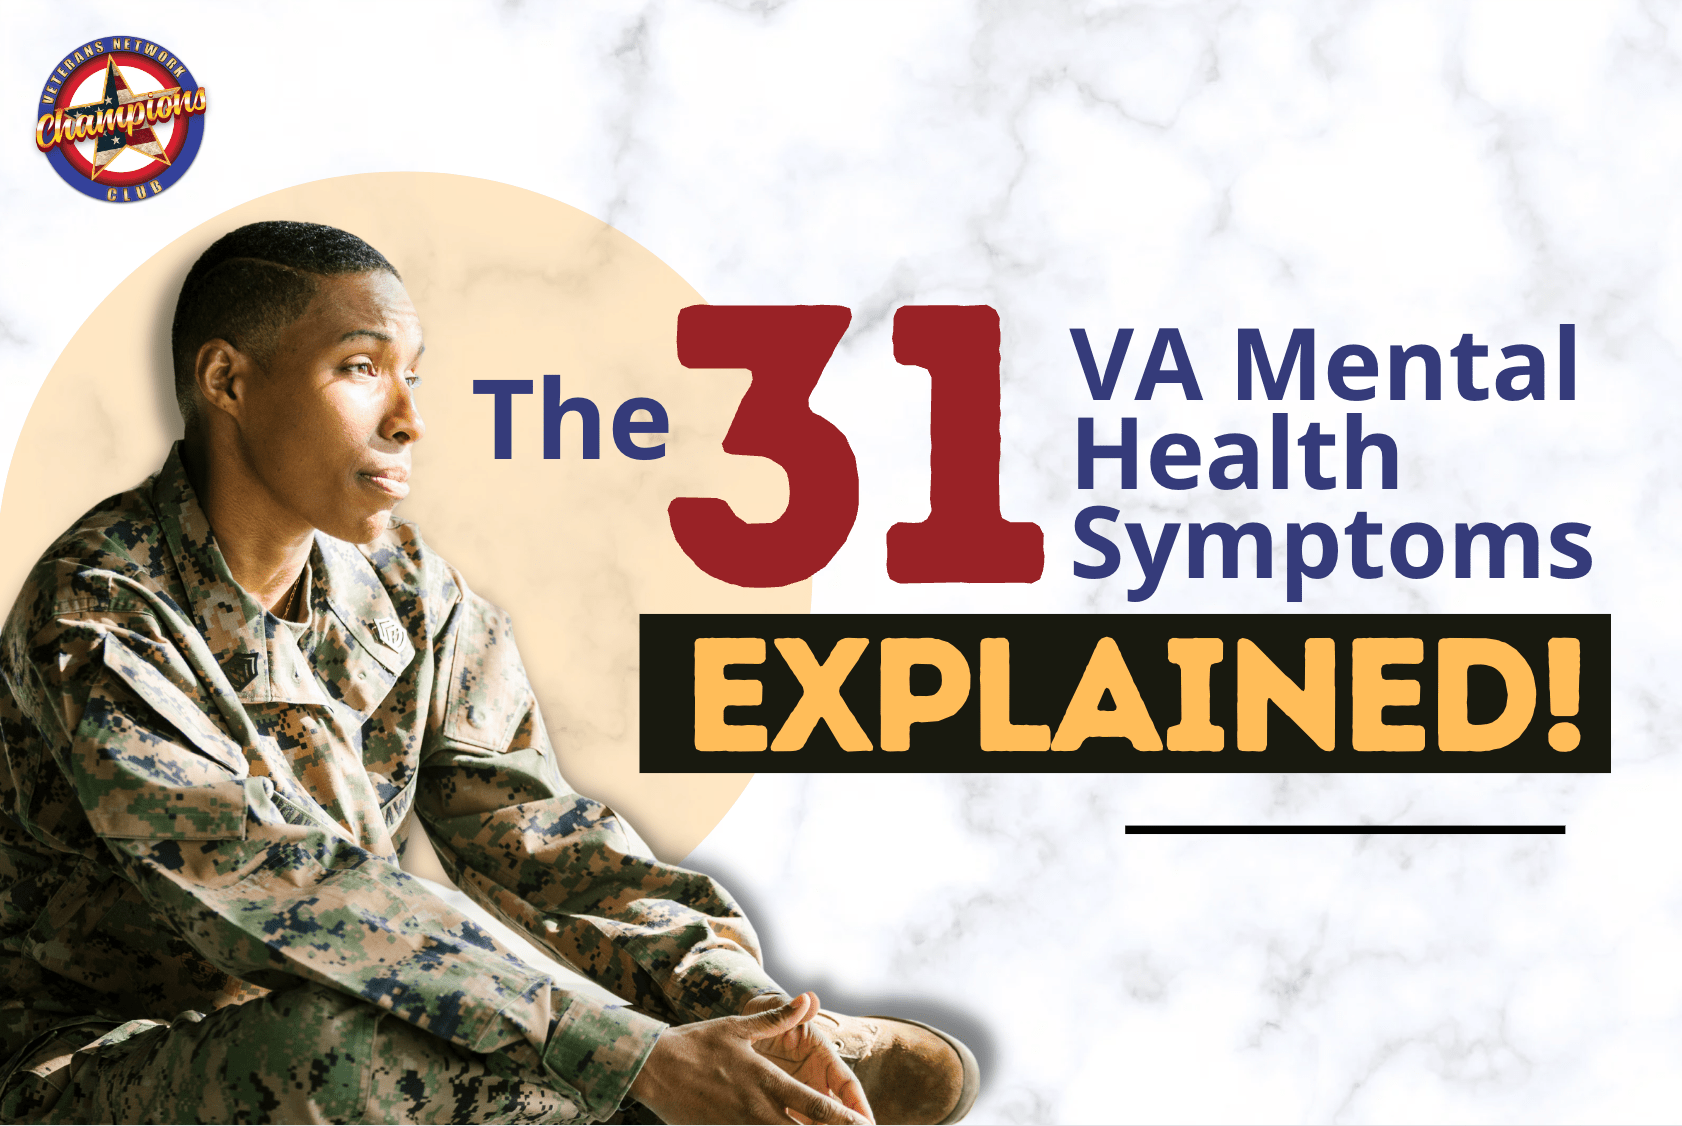 The 31 VA Mental Health Symptoms Explained!